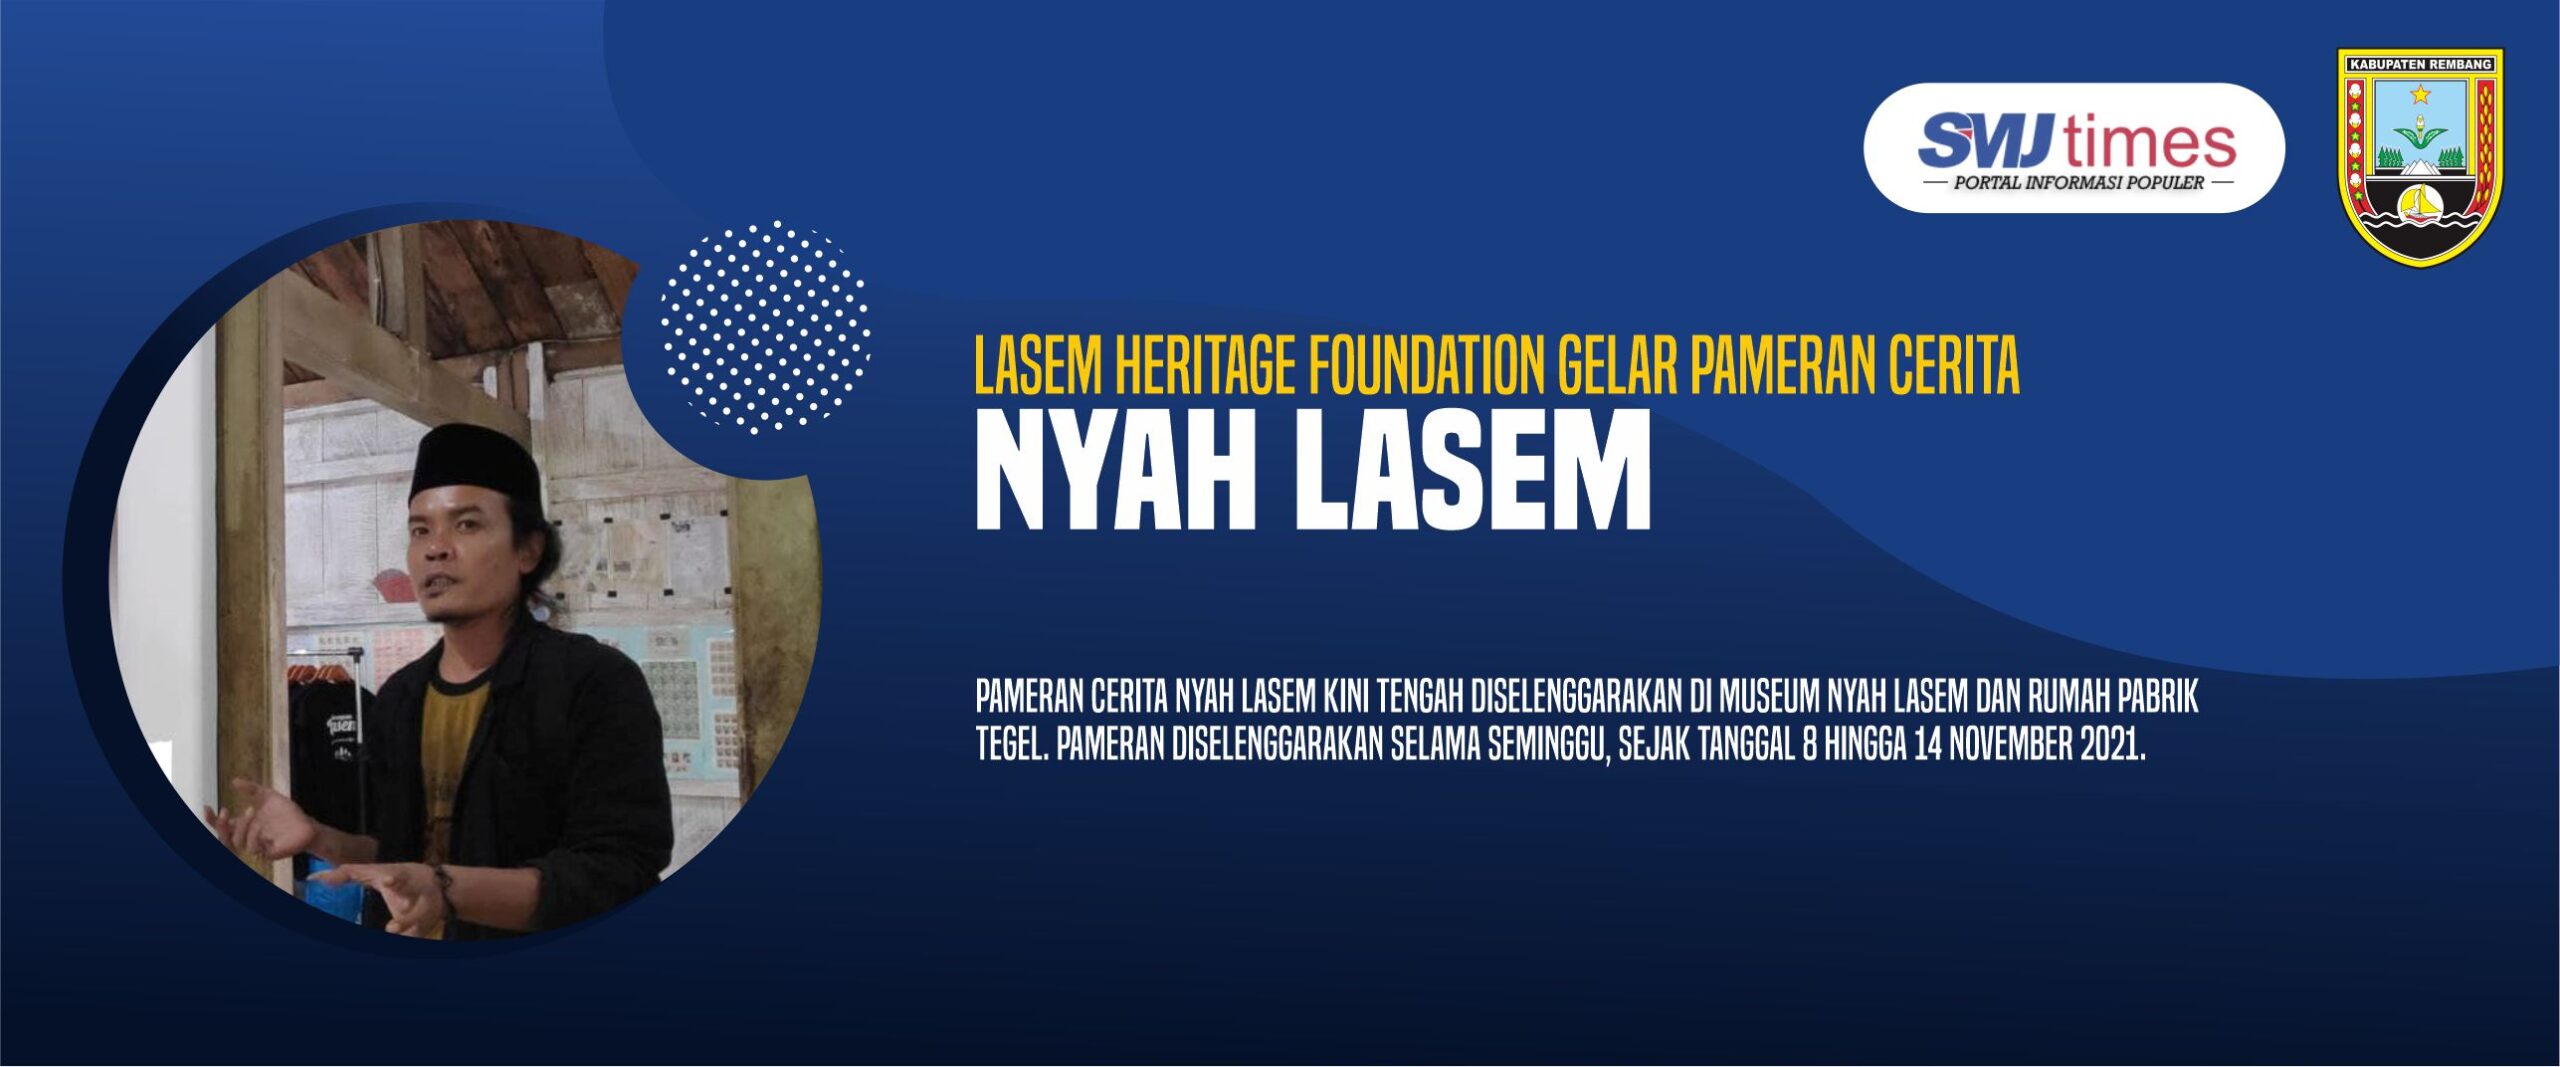 Lasem Heritage Foundation Gelar Pameran Cerita Nyah Lasem